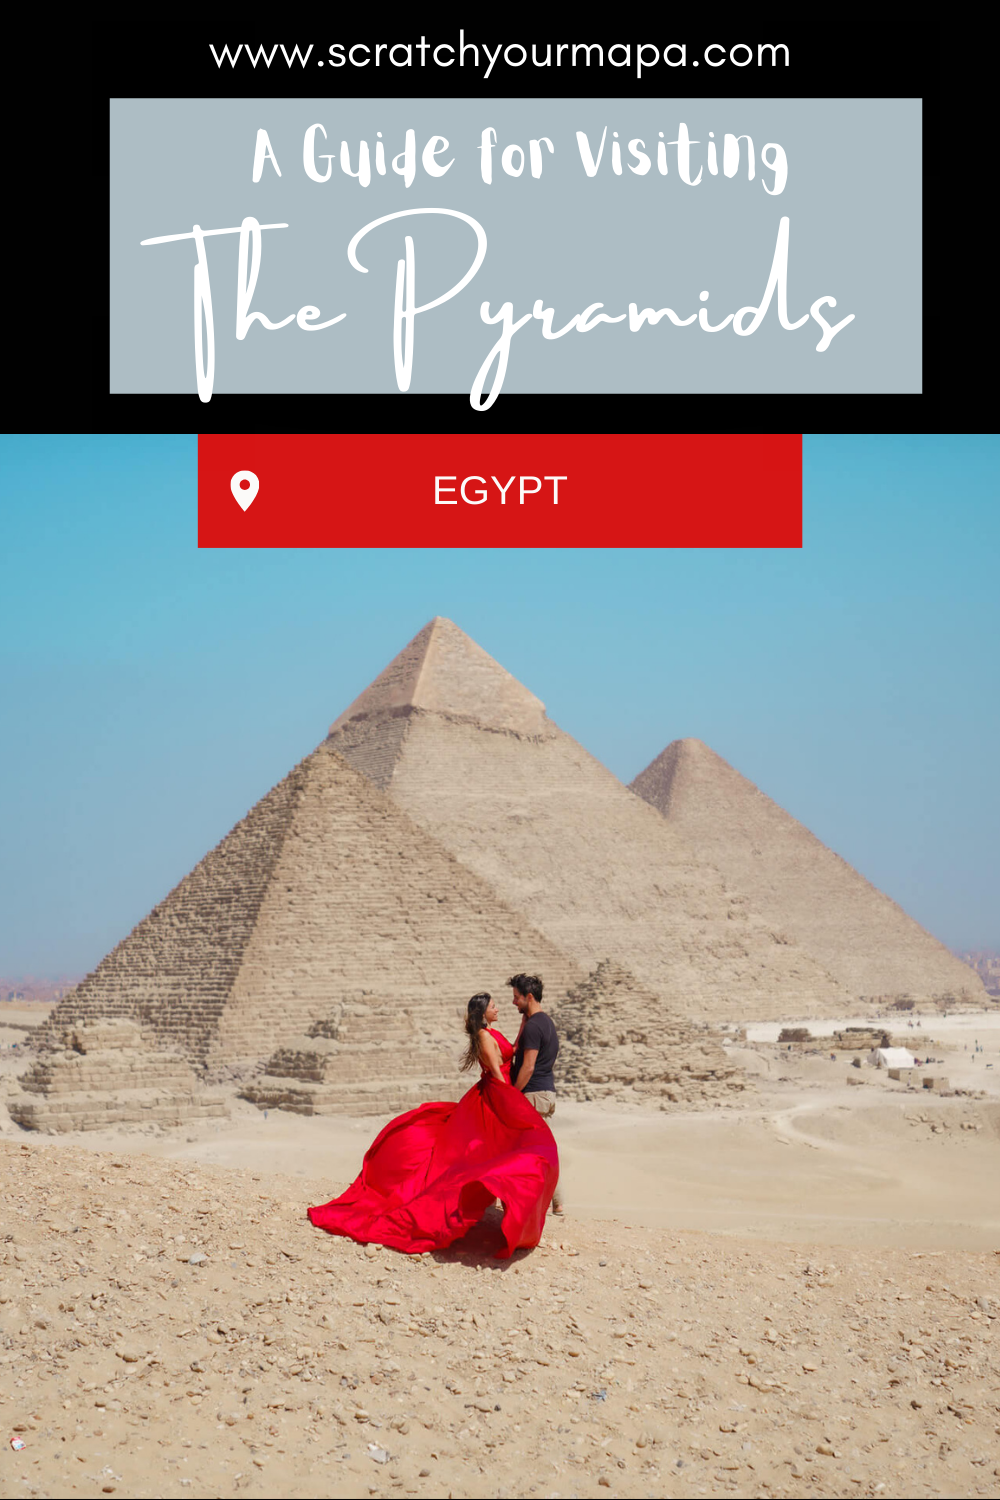 Pyramids of Giza in Egypt pin